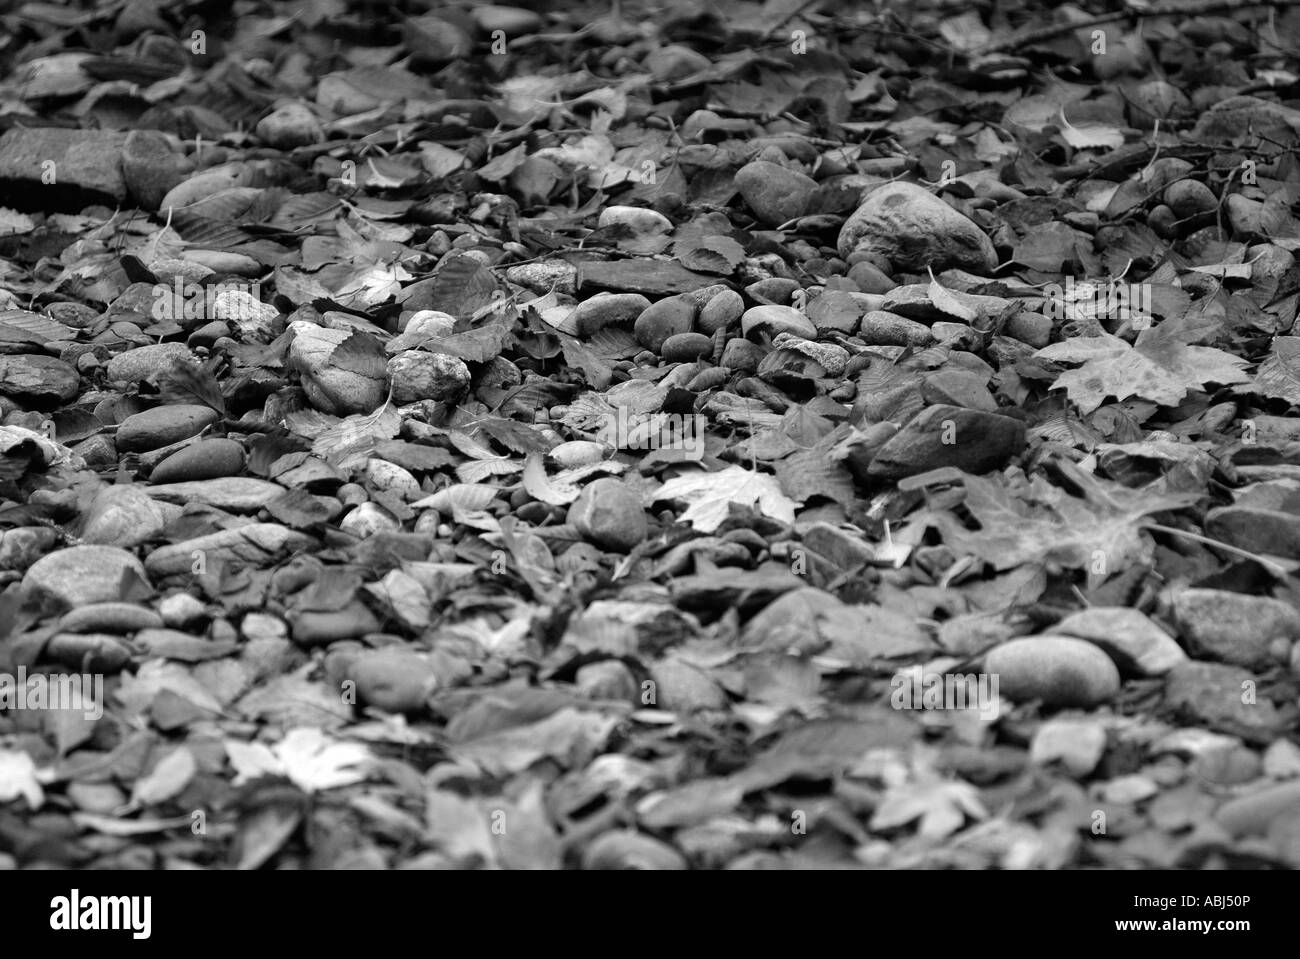 Fallen leaves on pebbles during autum season Stock Photo